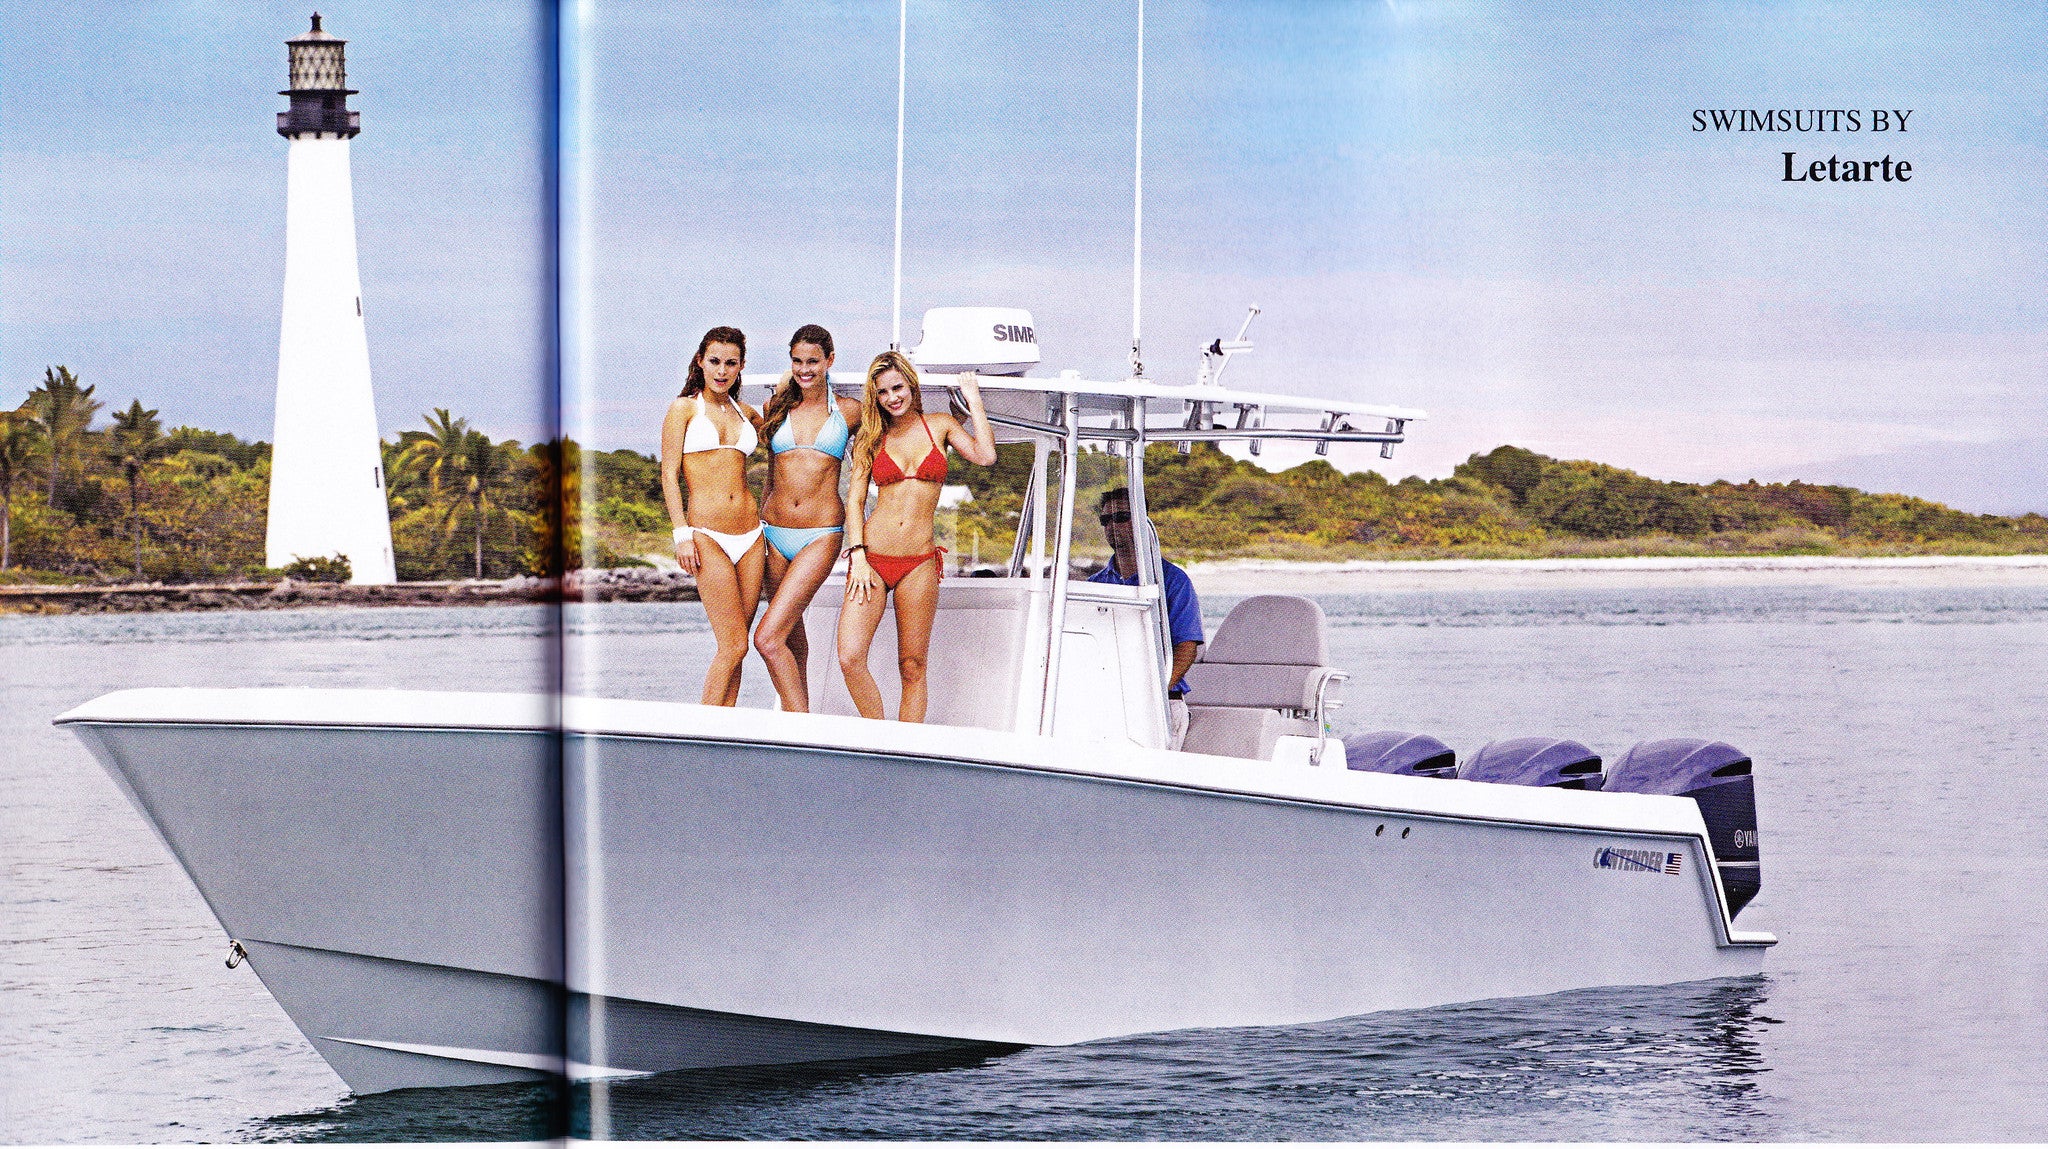 Southern Boating magazine 2013 Swimsuit edition